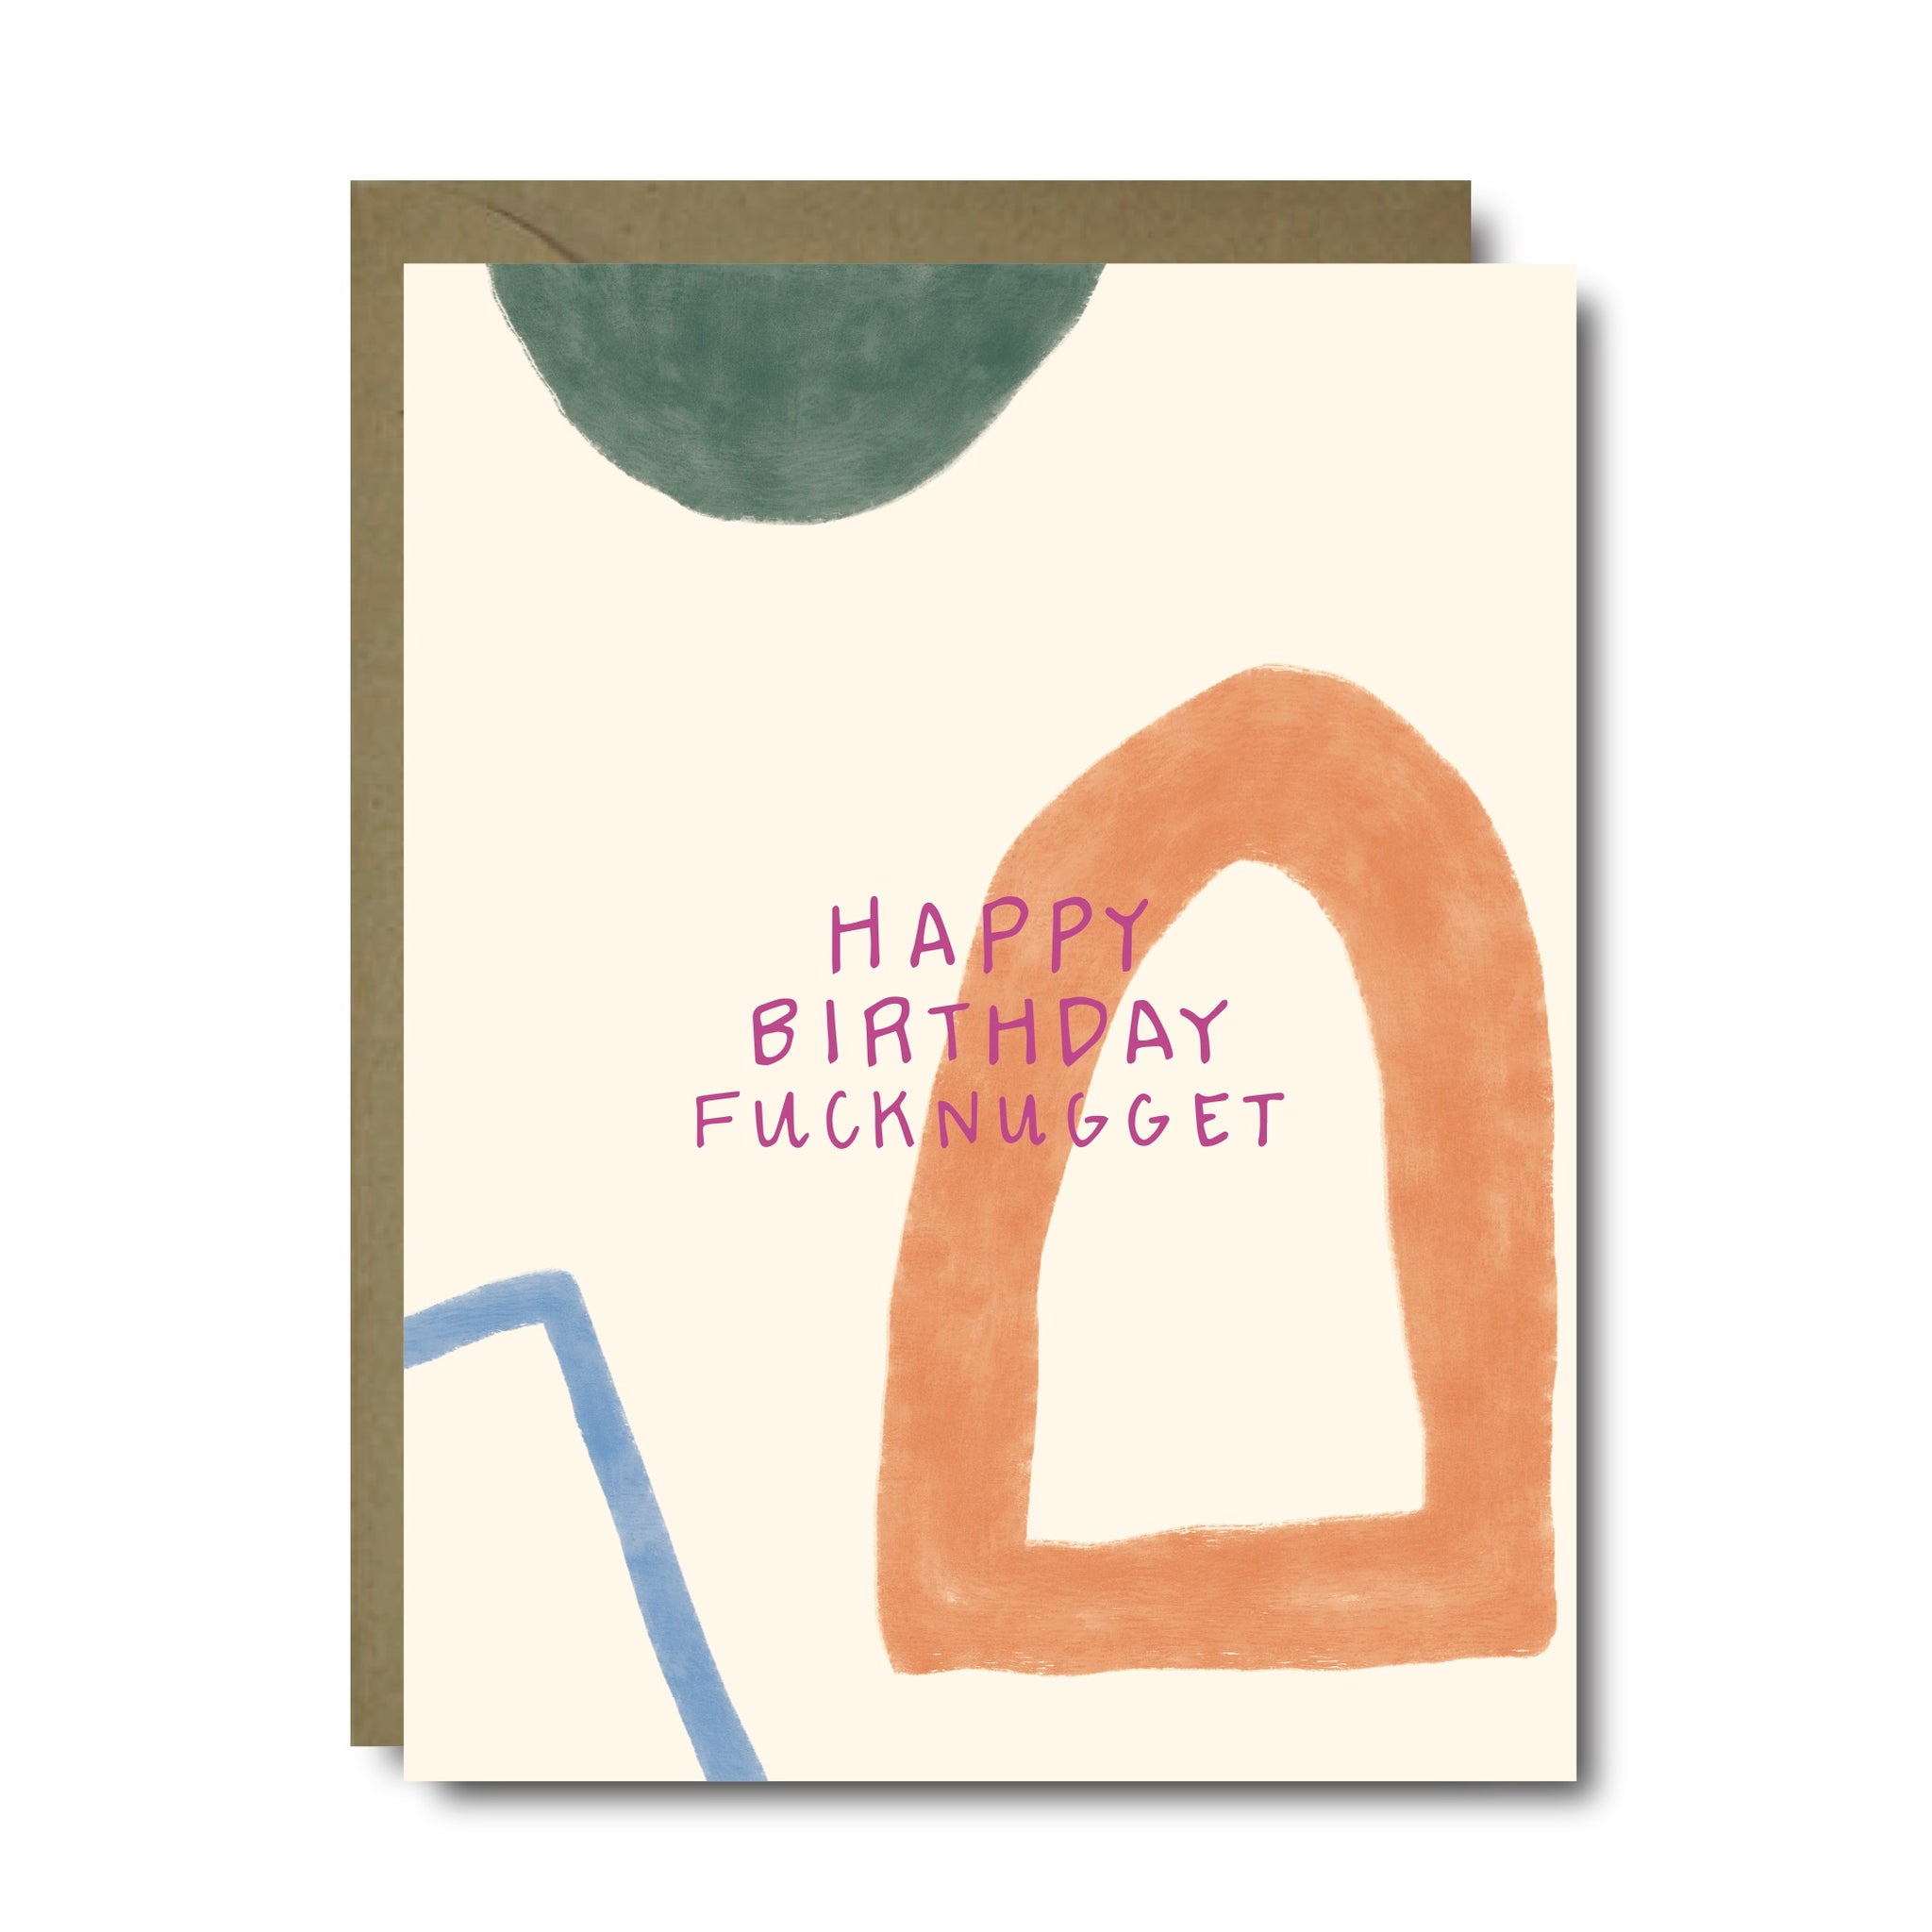 Fuck Nugget Birthday Greeting Card | A2